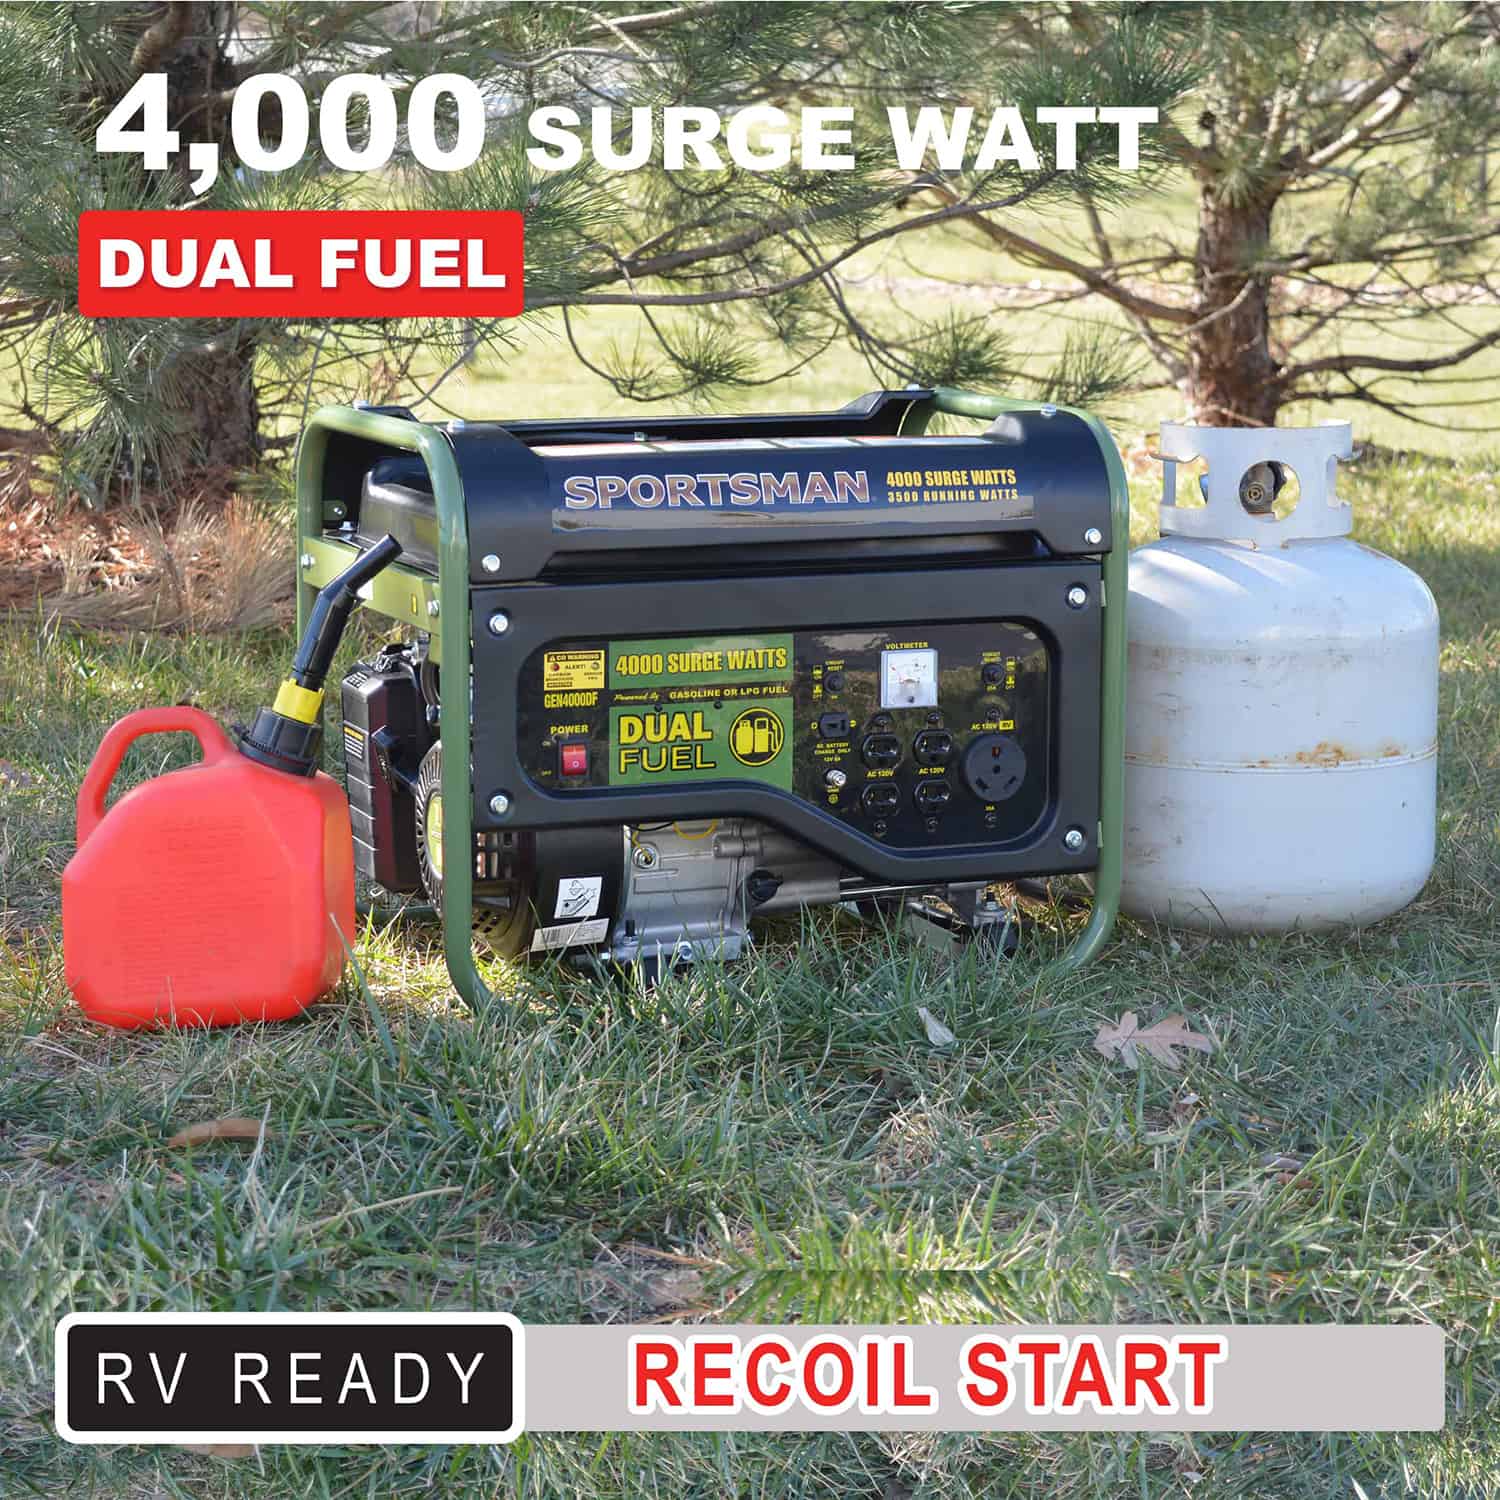 4,000 Surge Watt Dual Fuel Portable Generator